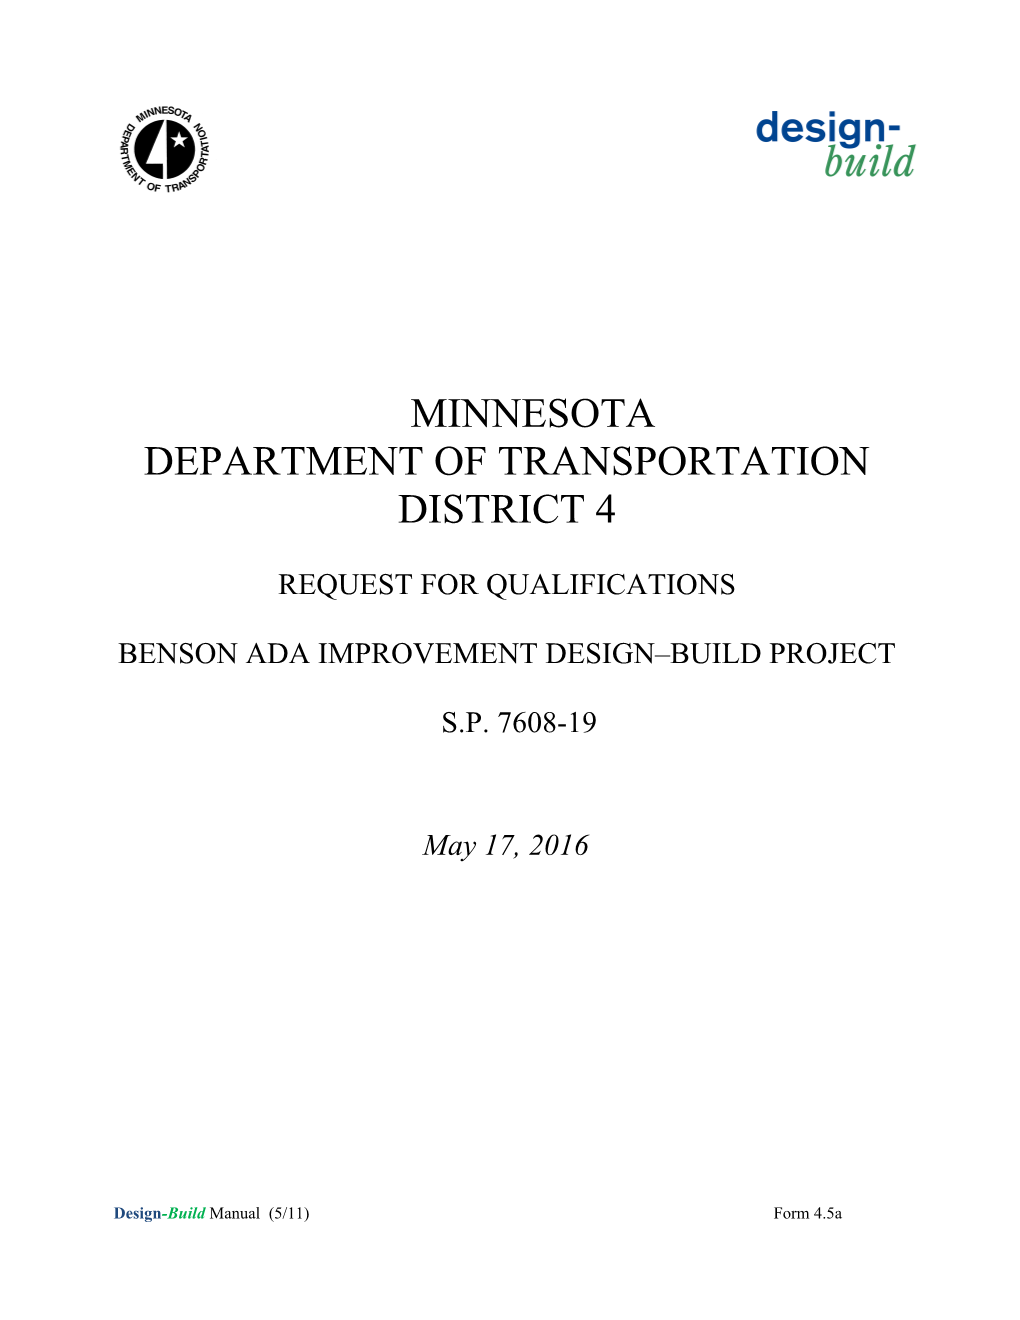 Benson Ada Improvement Design Build Project